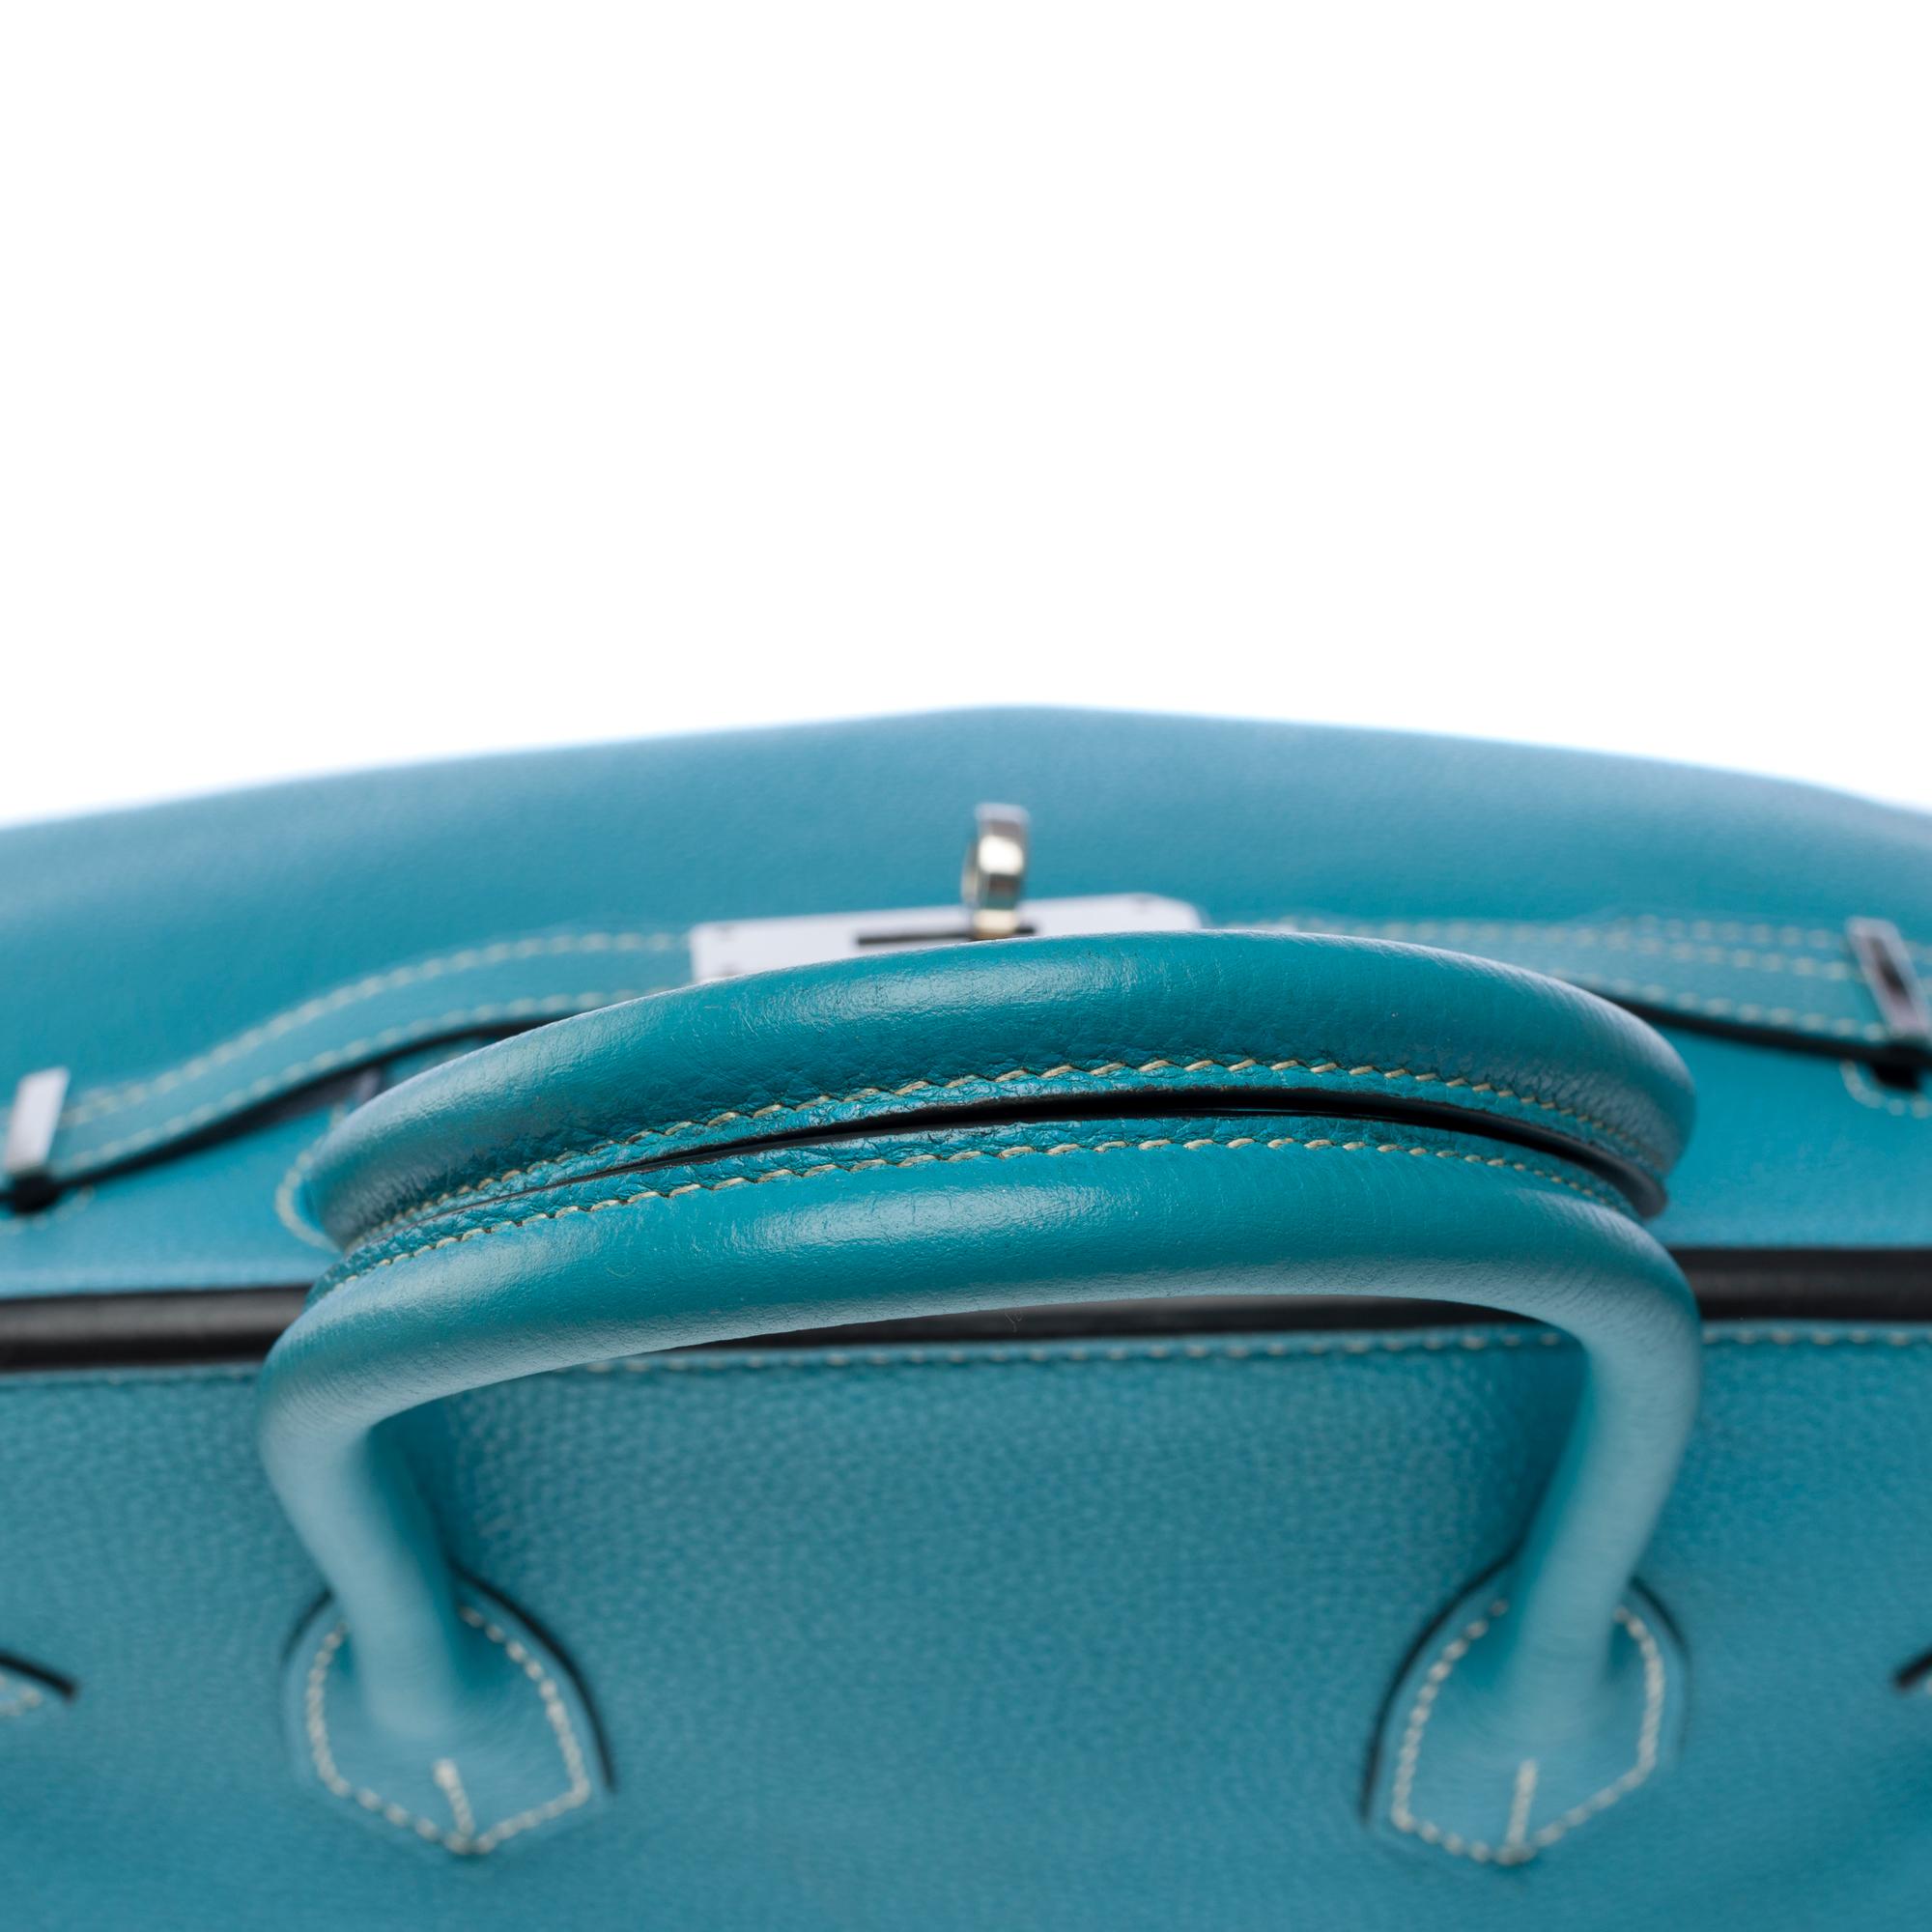 Splendid Hermes Birkin 30 handbag in Blue Jean Togo leather, SHW For Sale 6